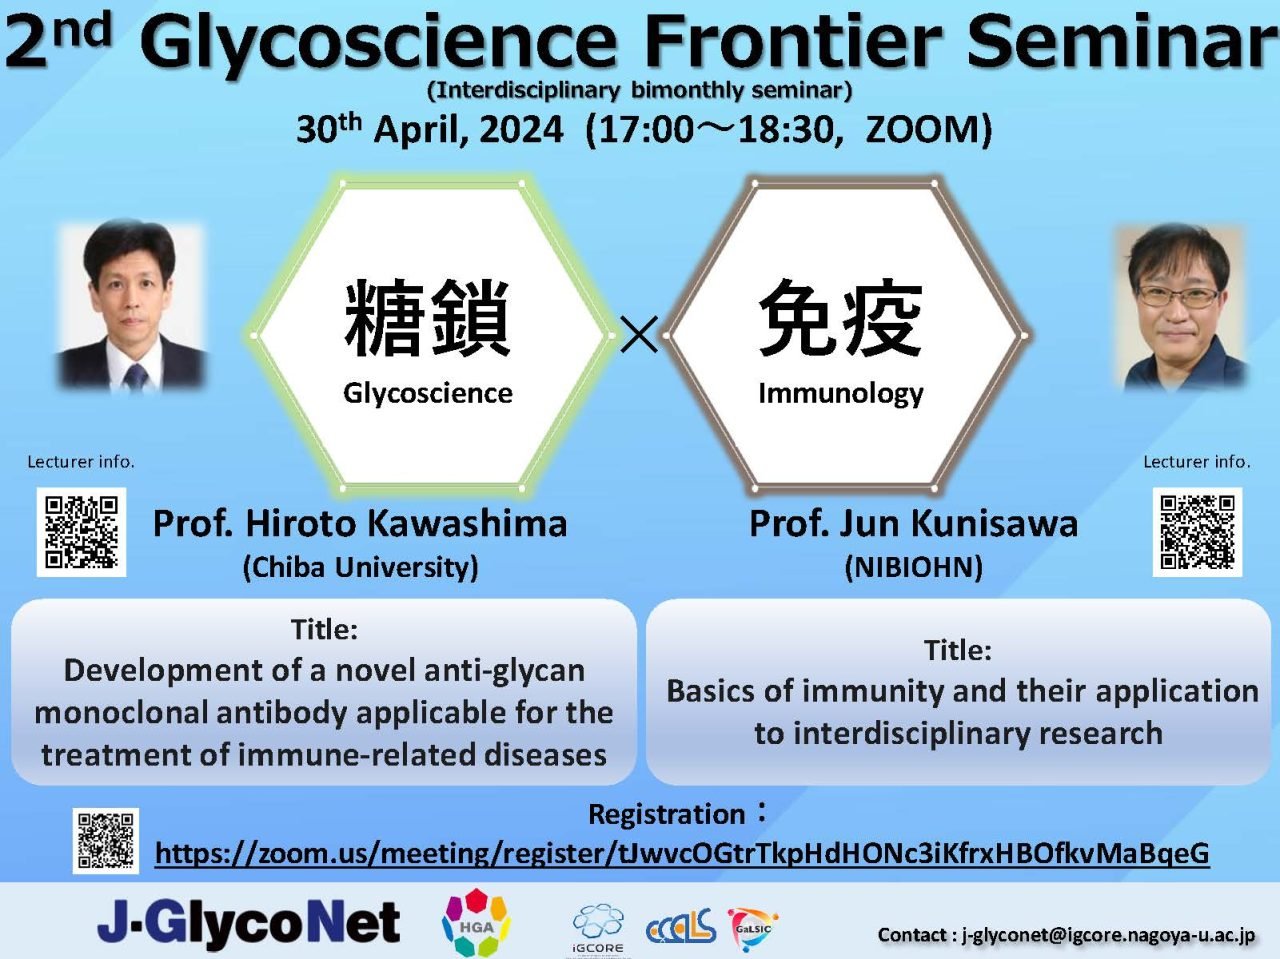 2nd Glycoscience Frontier Seminar